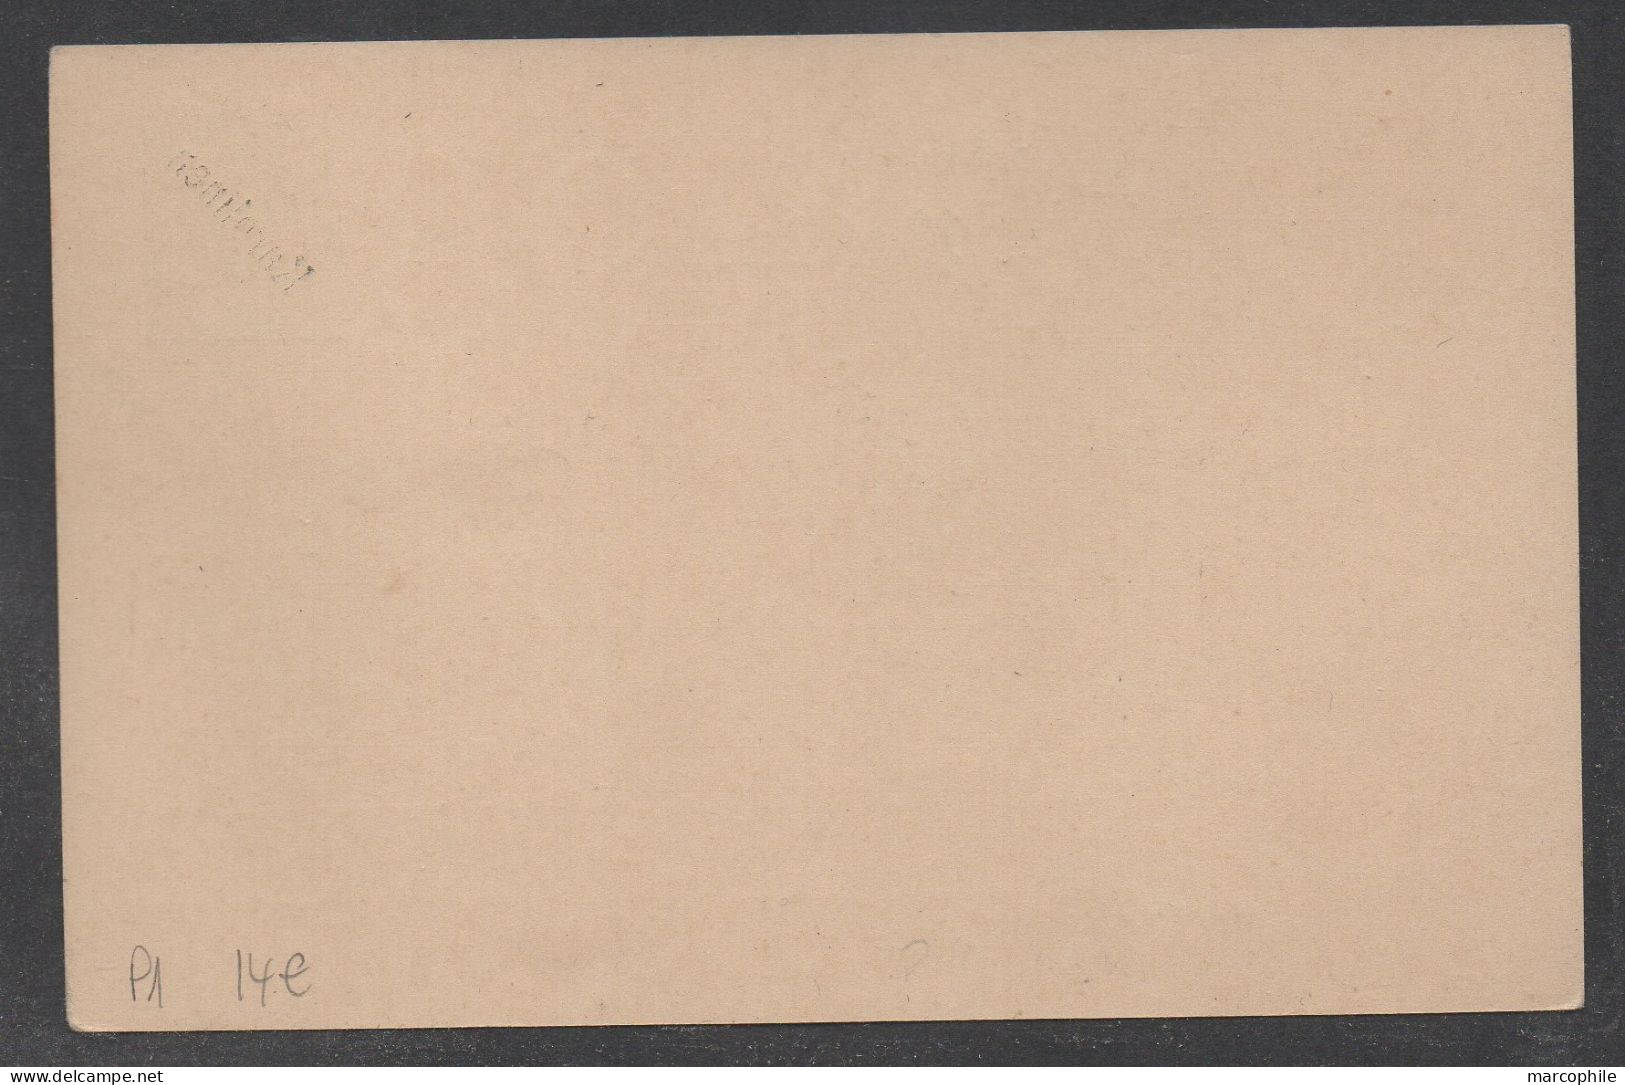 KAROLINEN -  CAROLINES / 1899 # P1 - GSK OHNE DATUM  - ENTIER POSTAL SANS DATE / KW 14.00 EURO - Caroline Islands